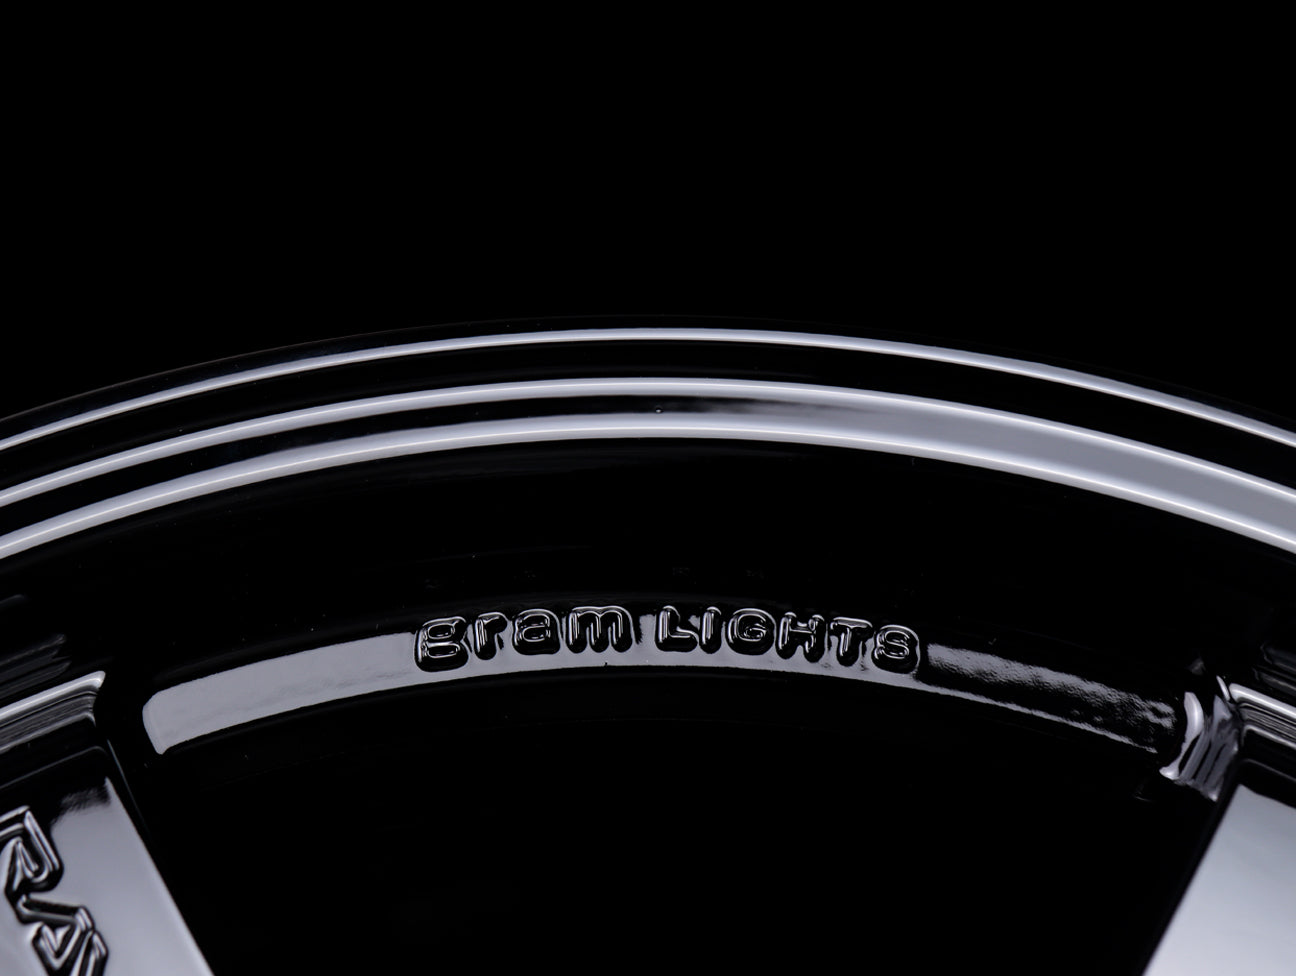 Rays Gram Lights 57DR Wheels - Gloss Black 17x9 / 5x114.3 / +38